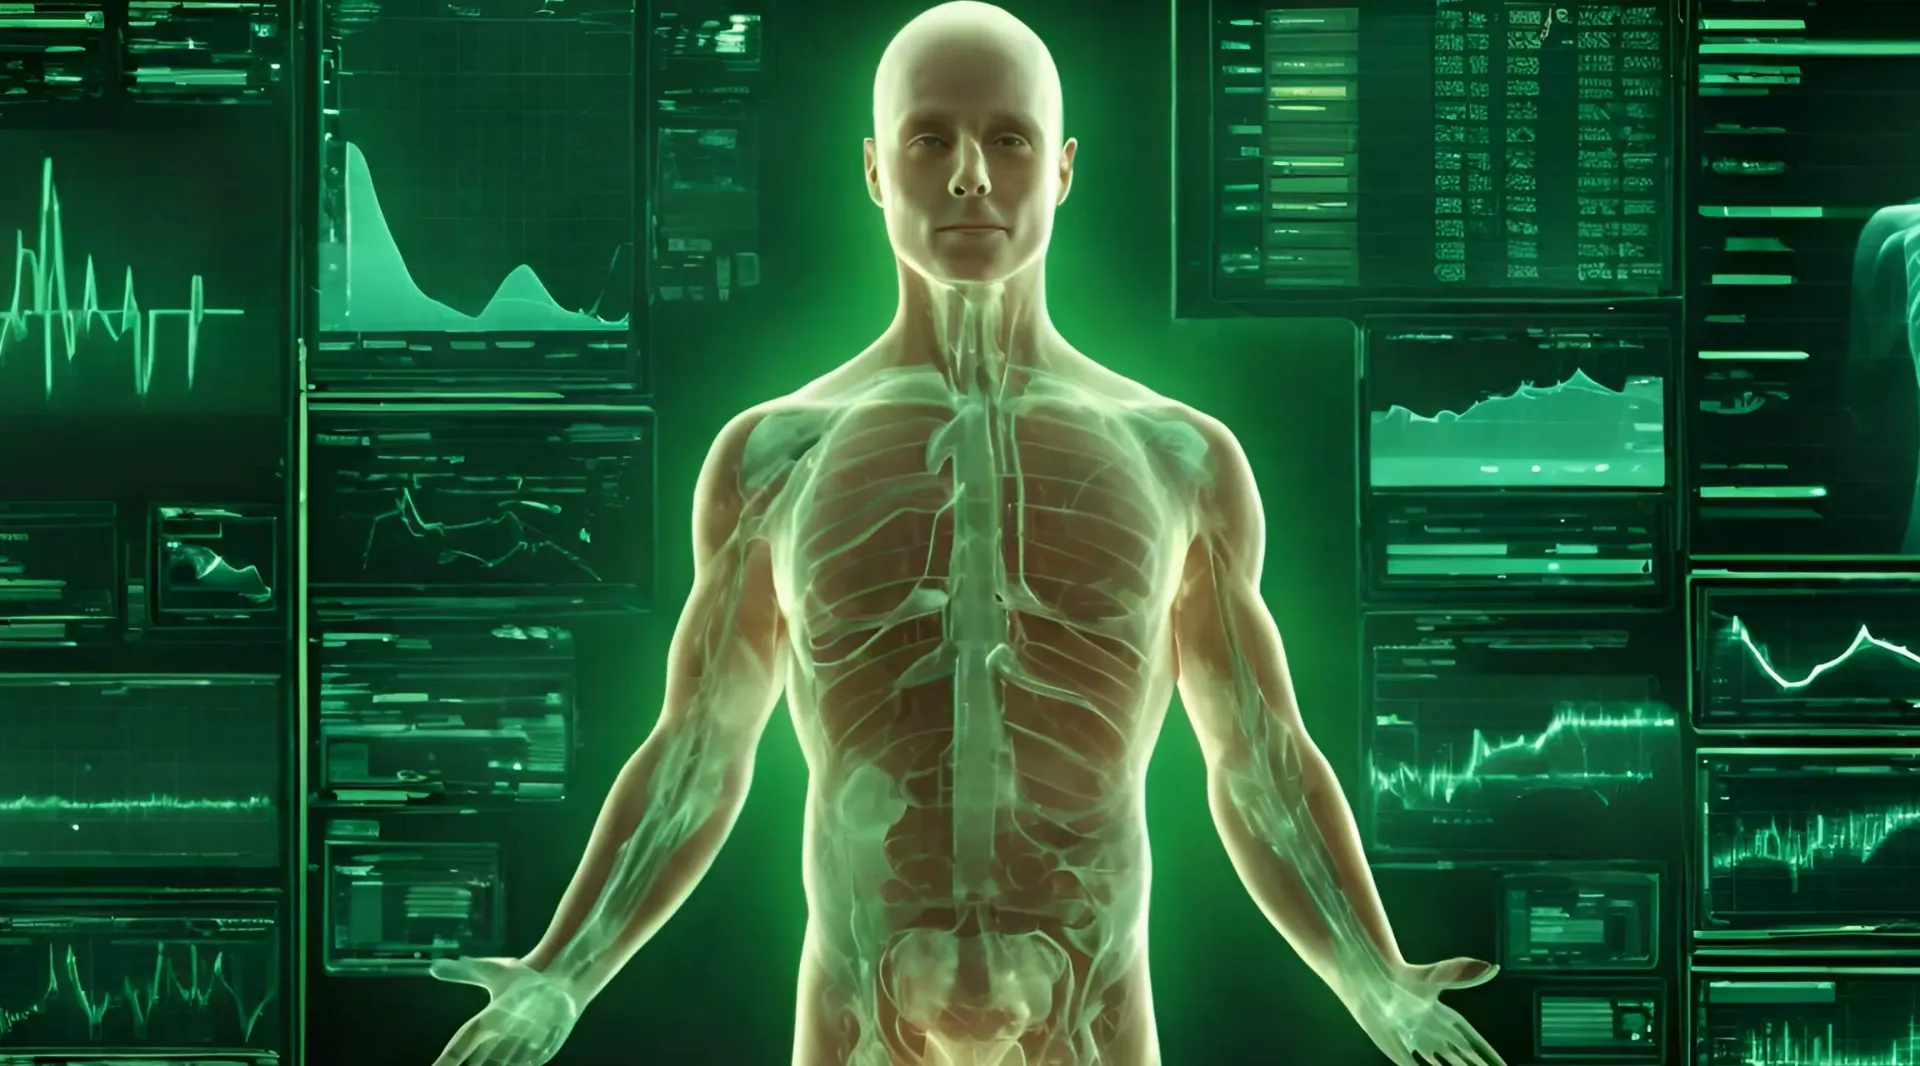 Futuristic Medicine Virtual Human Interface